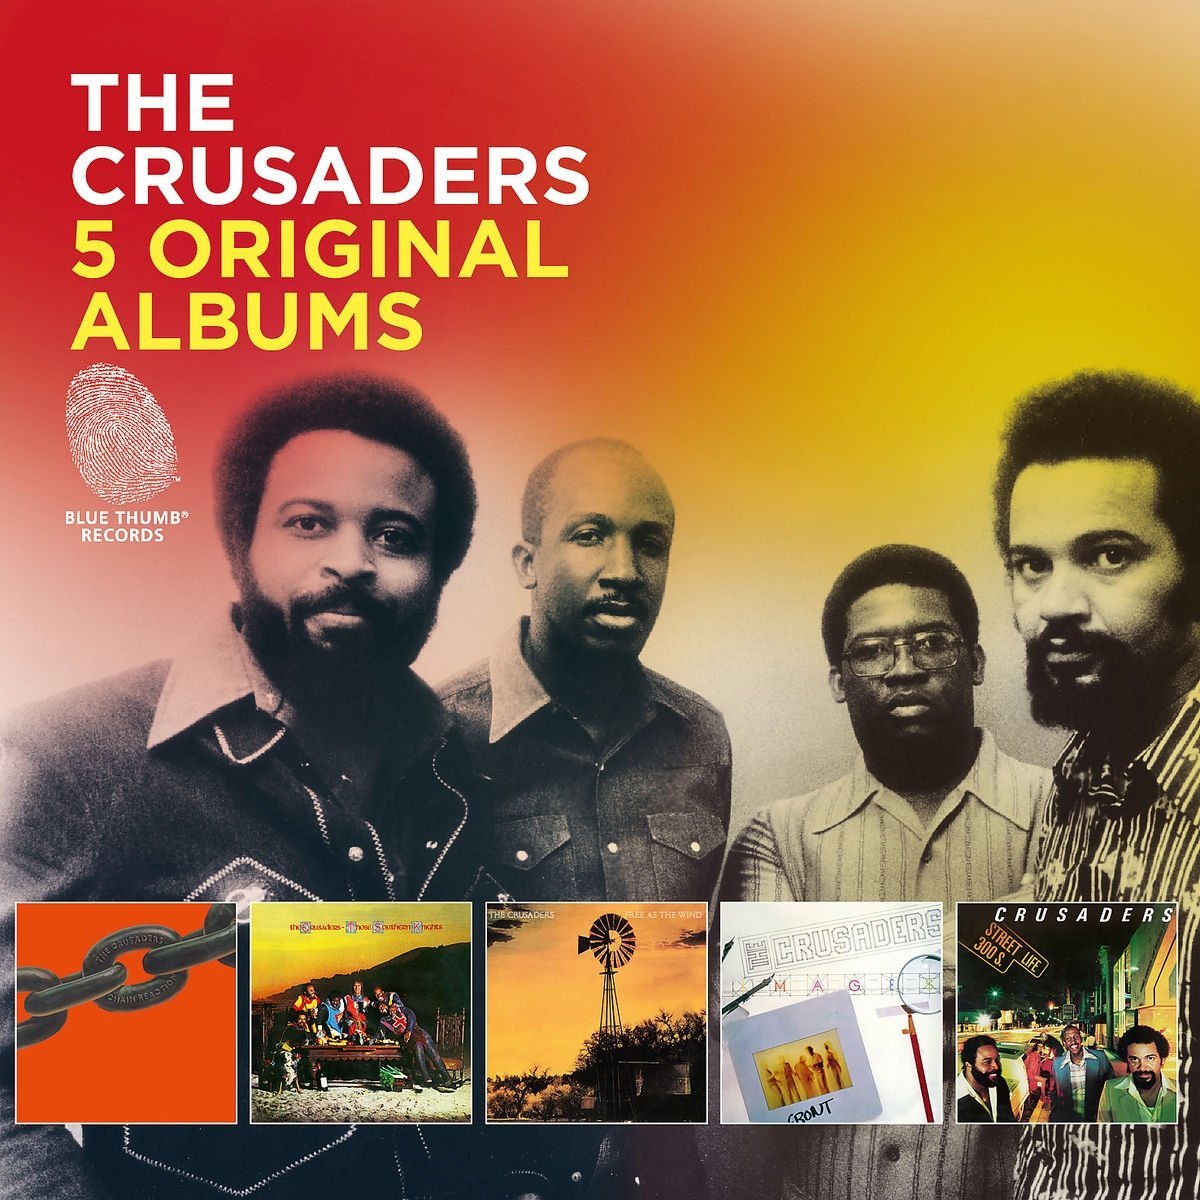 THE CRUSADERS - 5 Original Albums cover 